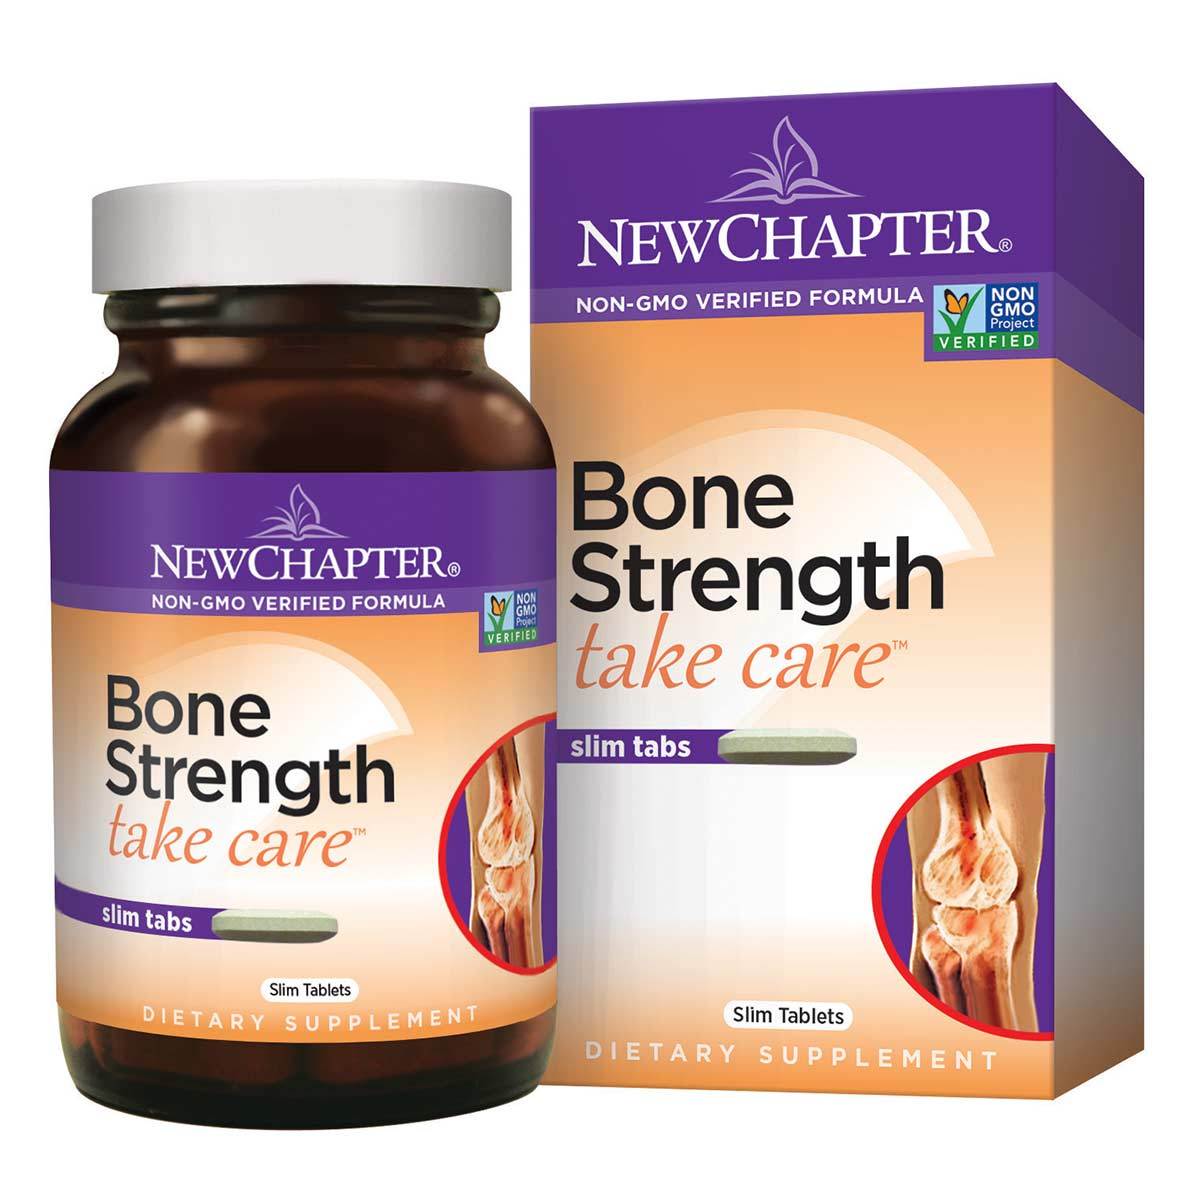 Primary image of Bone Strength Take Care